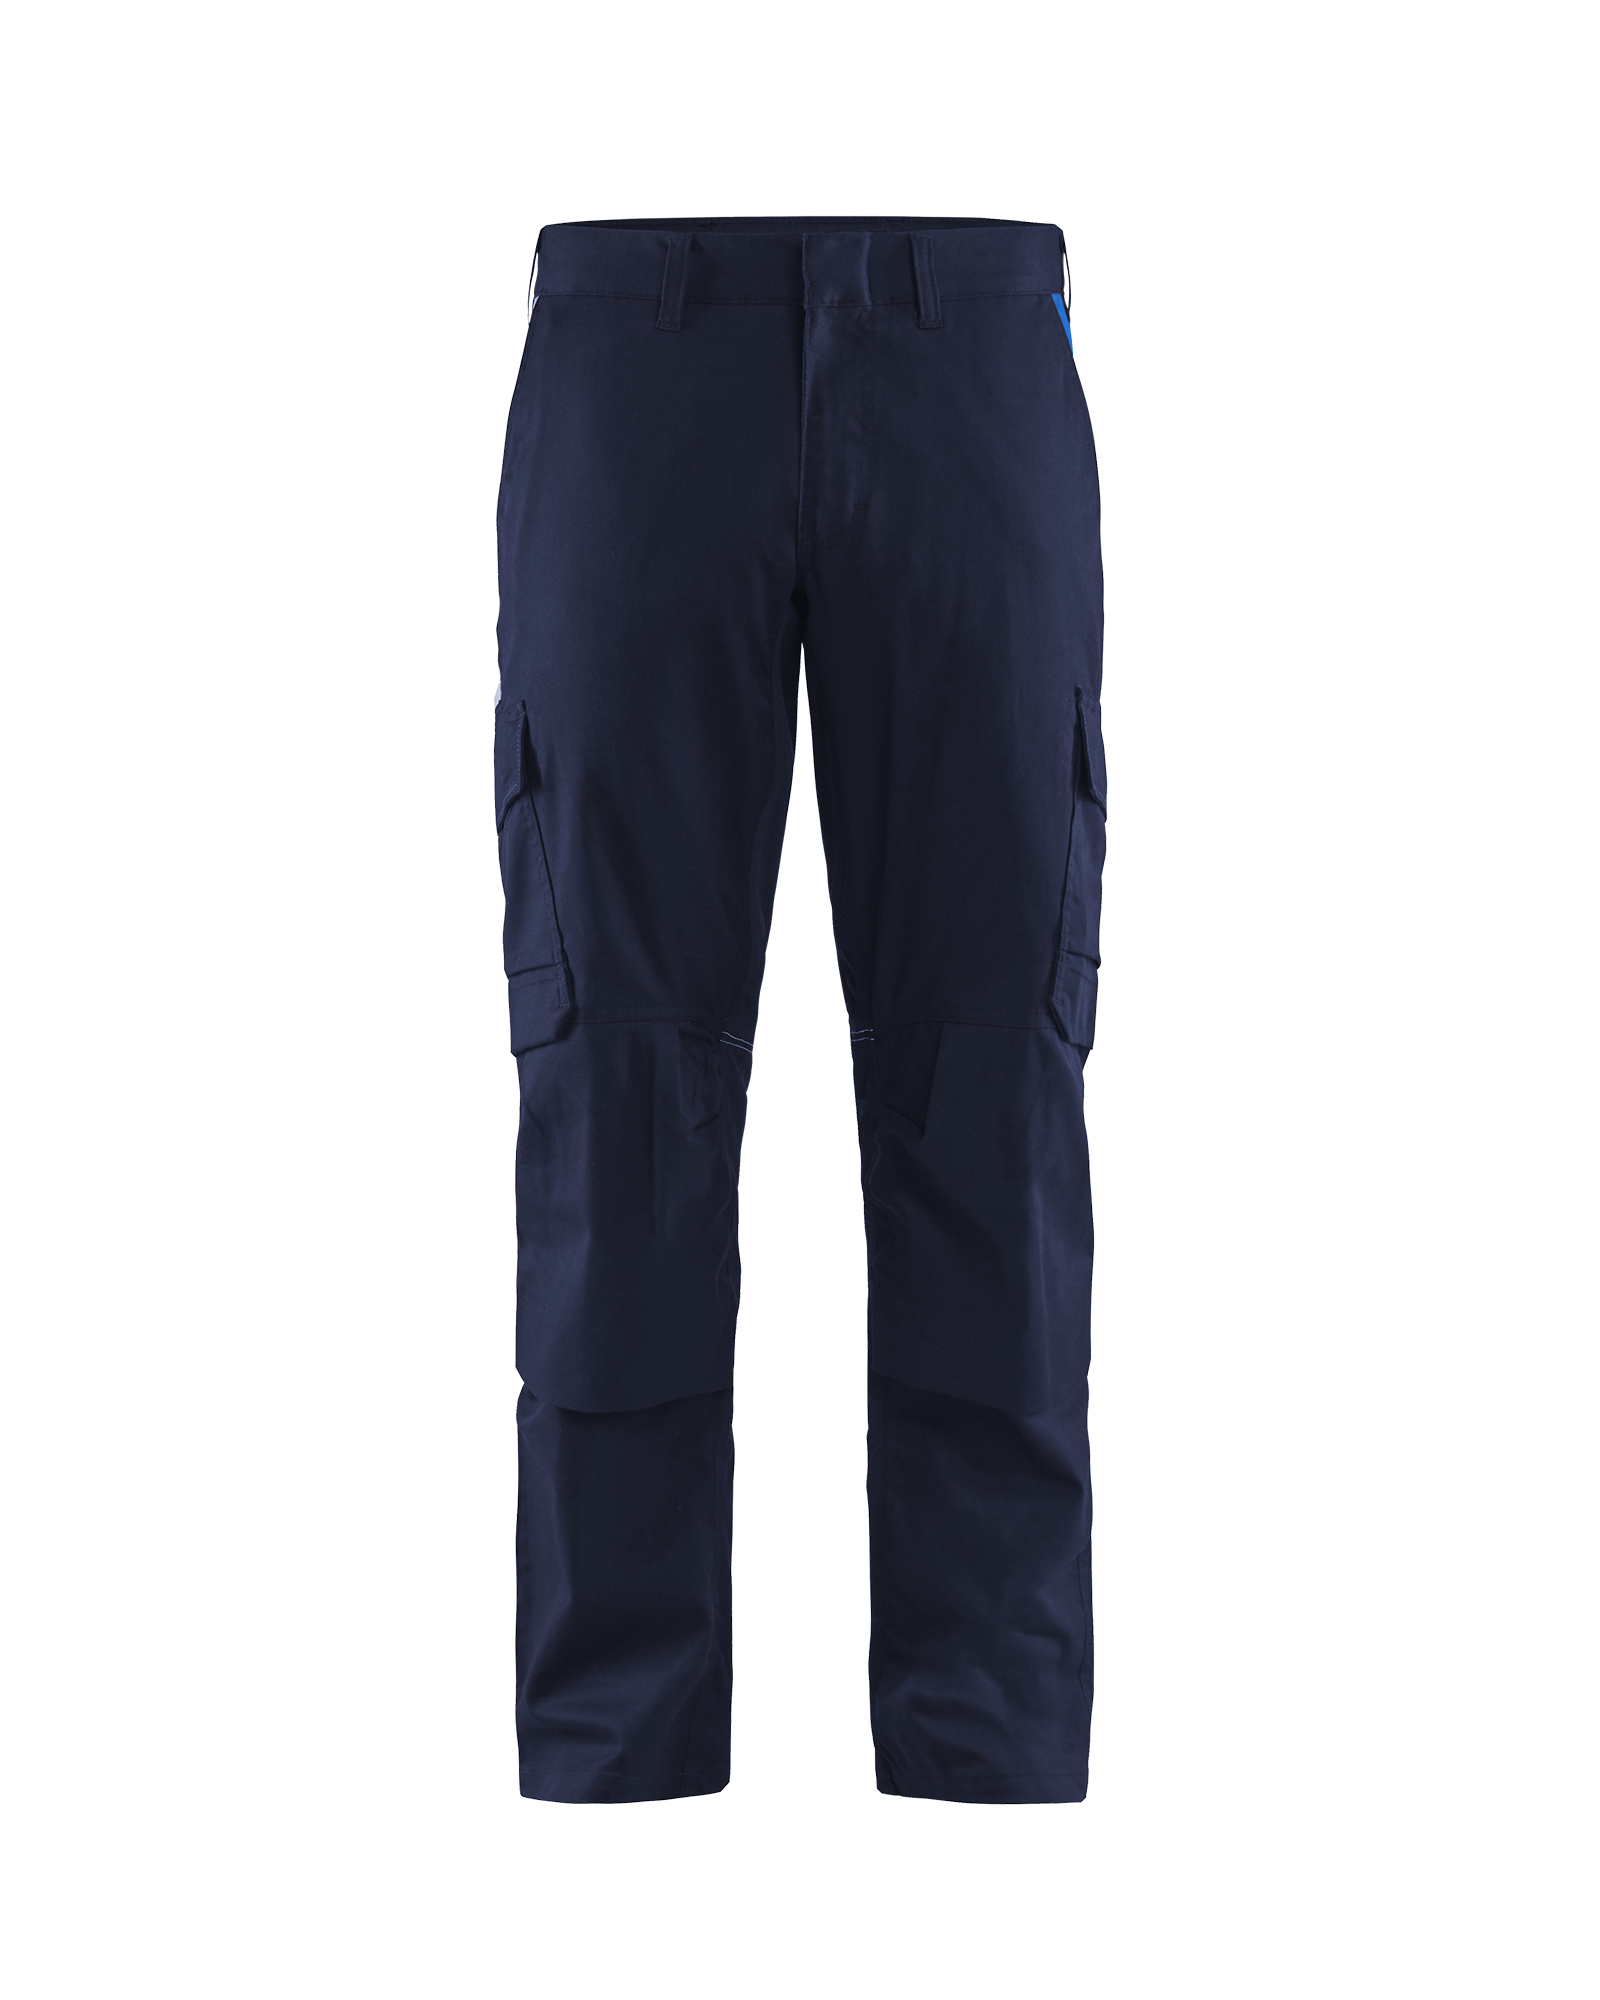 Pantalon industrie avec poches genouillères stretch 2D Blåkläder 1448 Marine/Bleu Roi Blaklader - 144818328985C